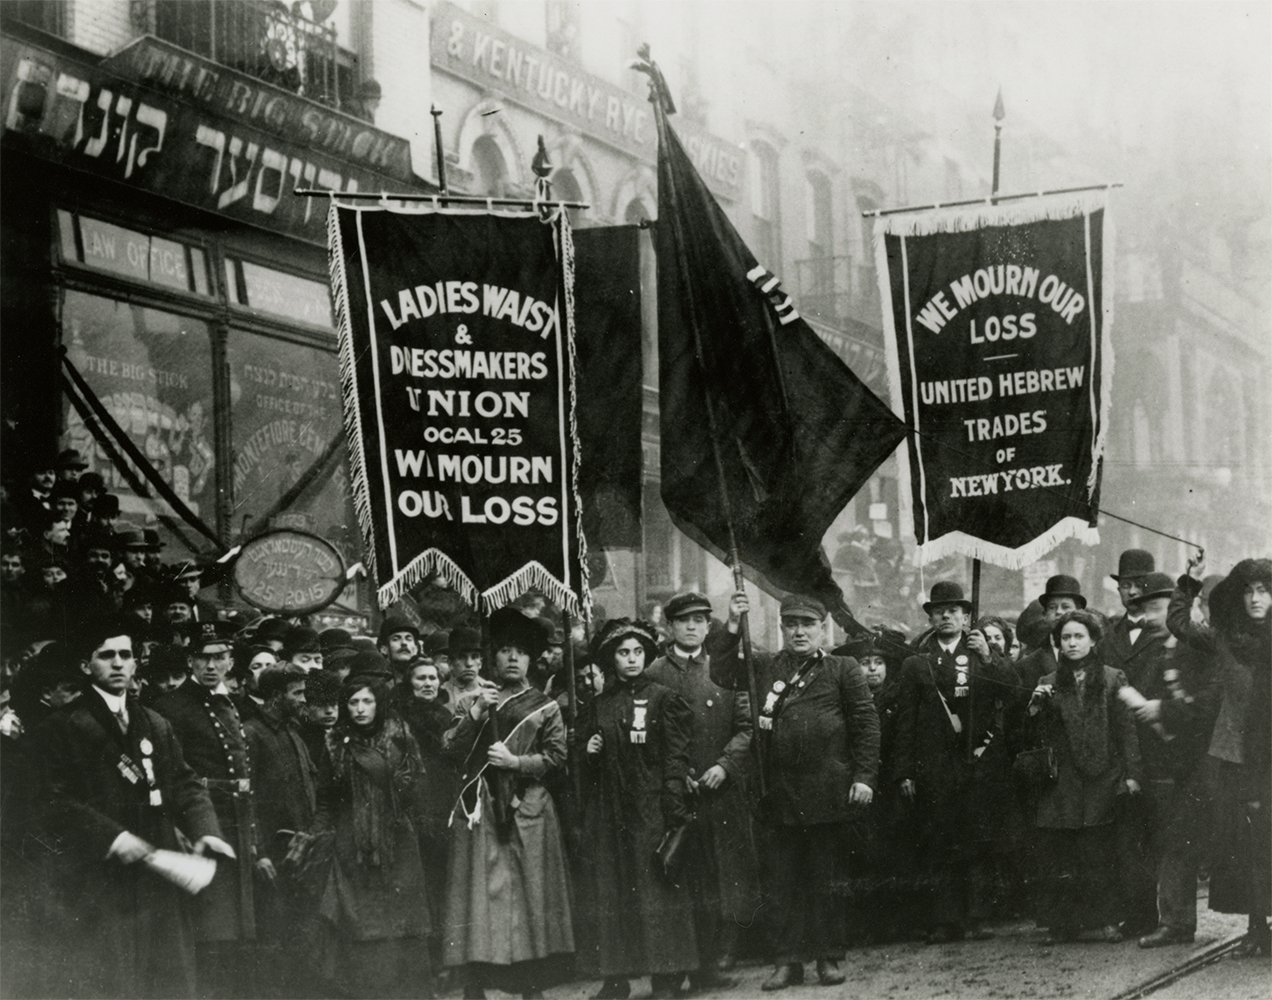 Profiles of Women in the Labor Movement